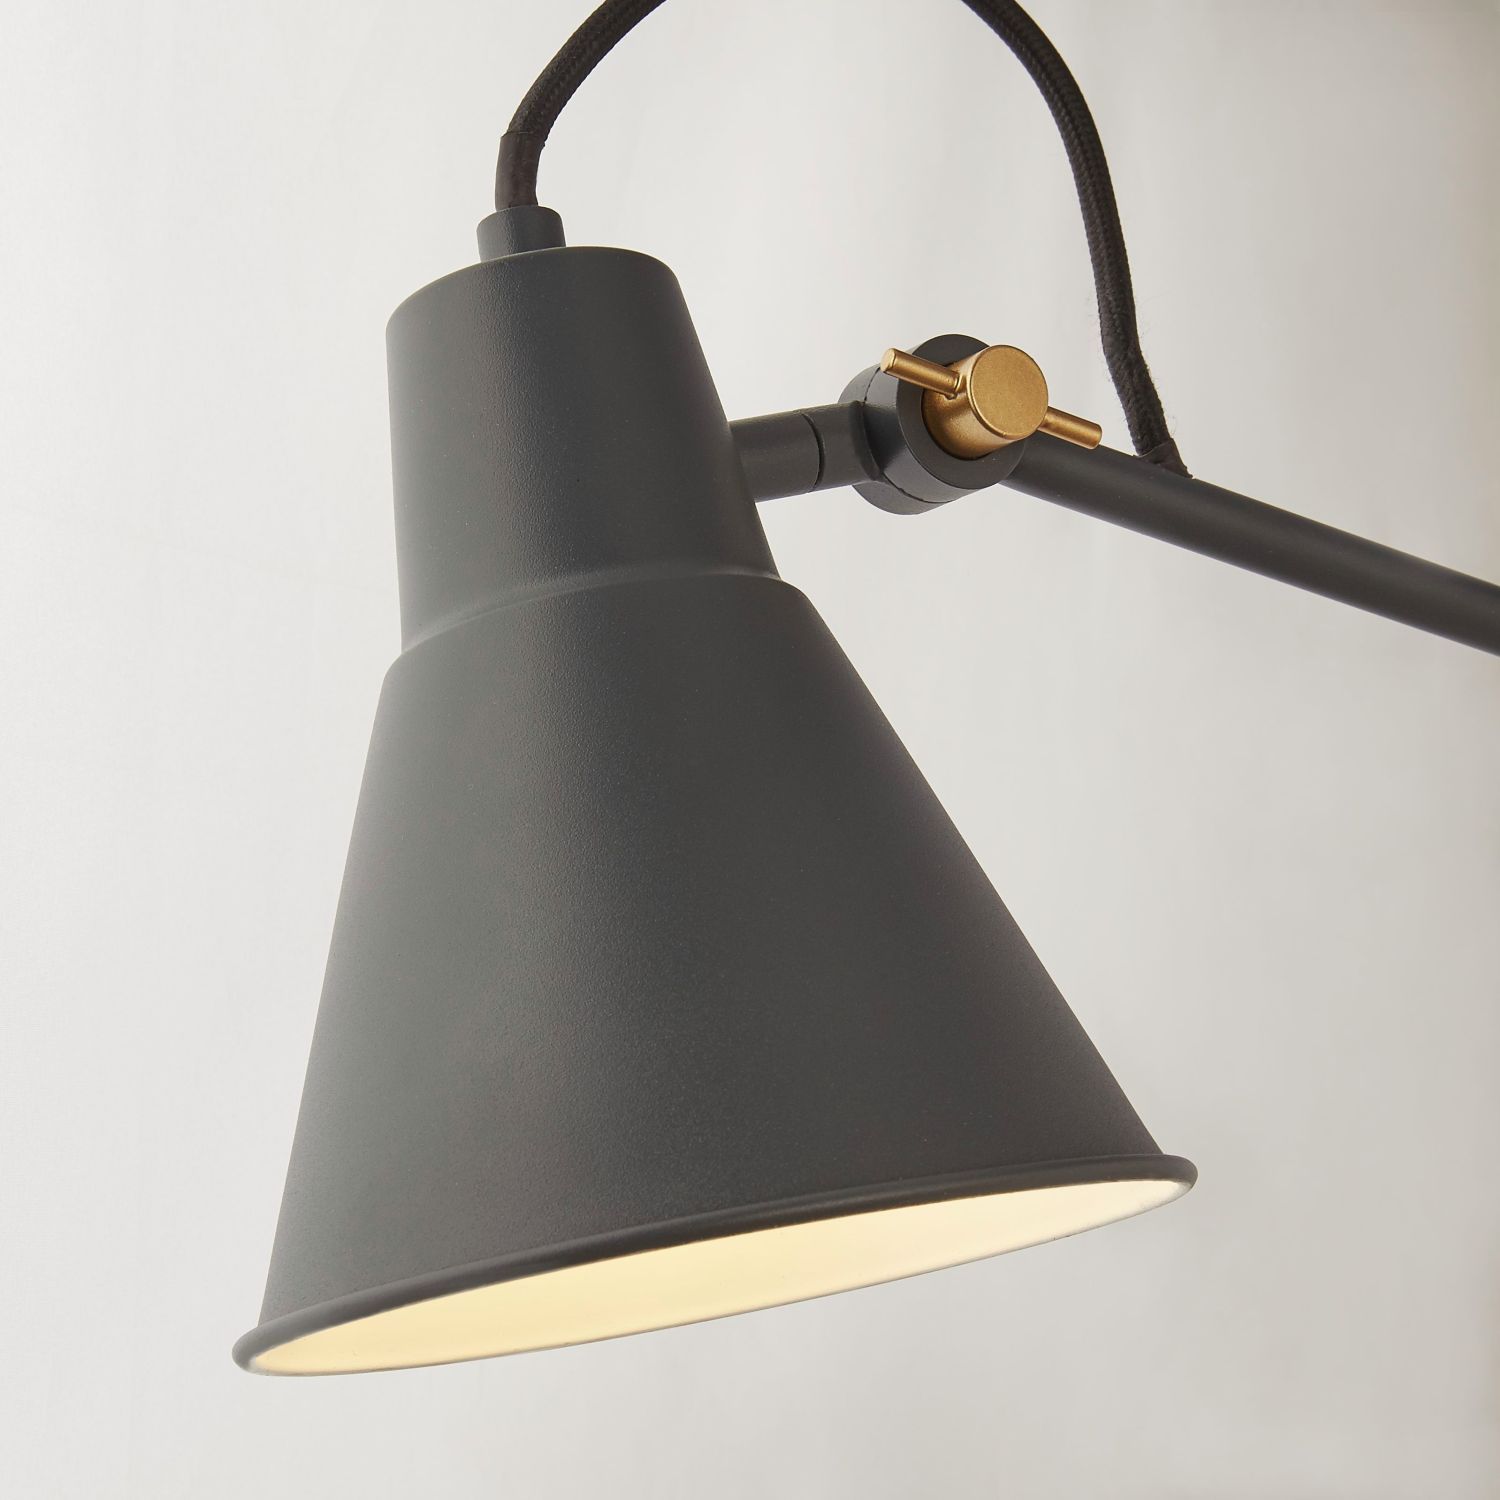 Wandlampe mit Schalter Gelenk verstellbar Grau Metall